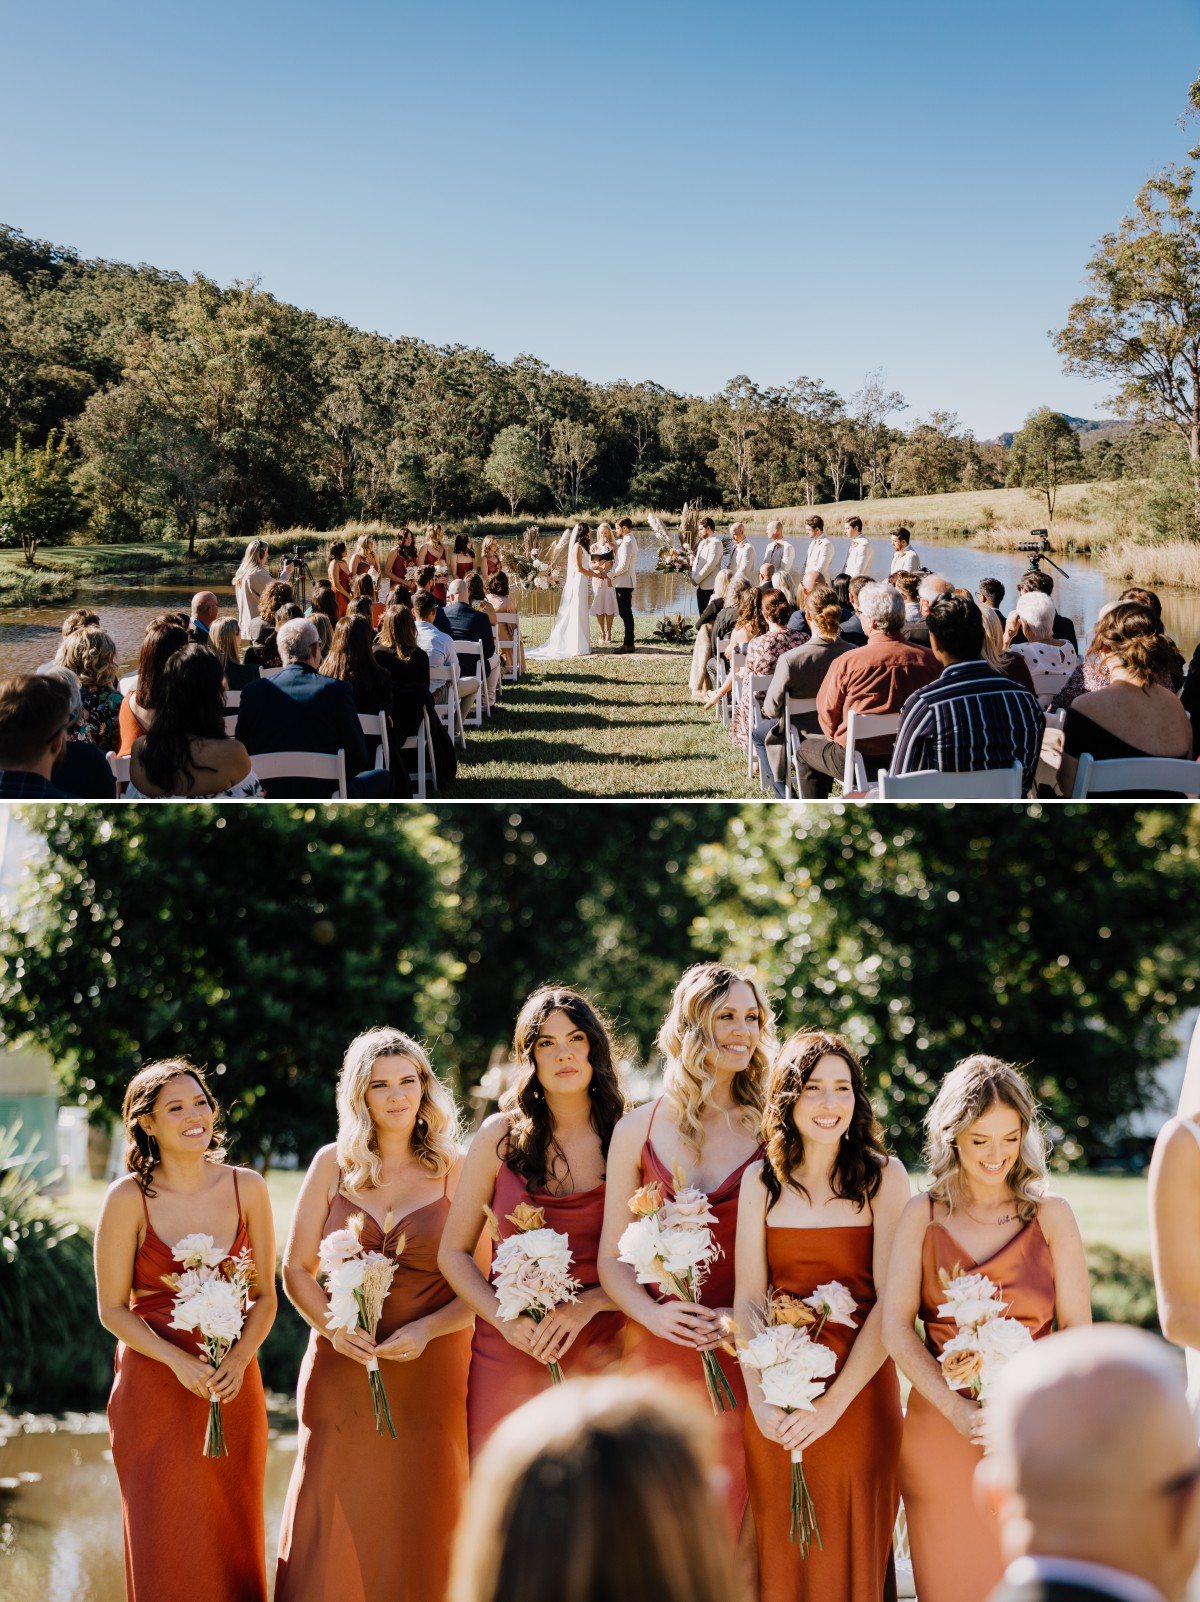 Gold Coast Farm House wedding ceremony